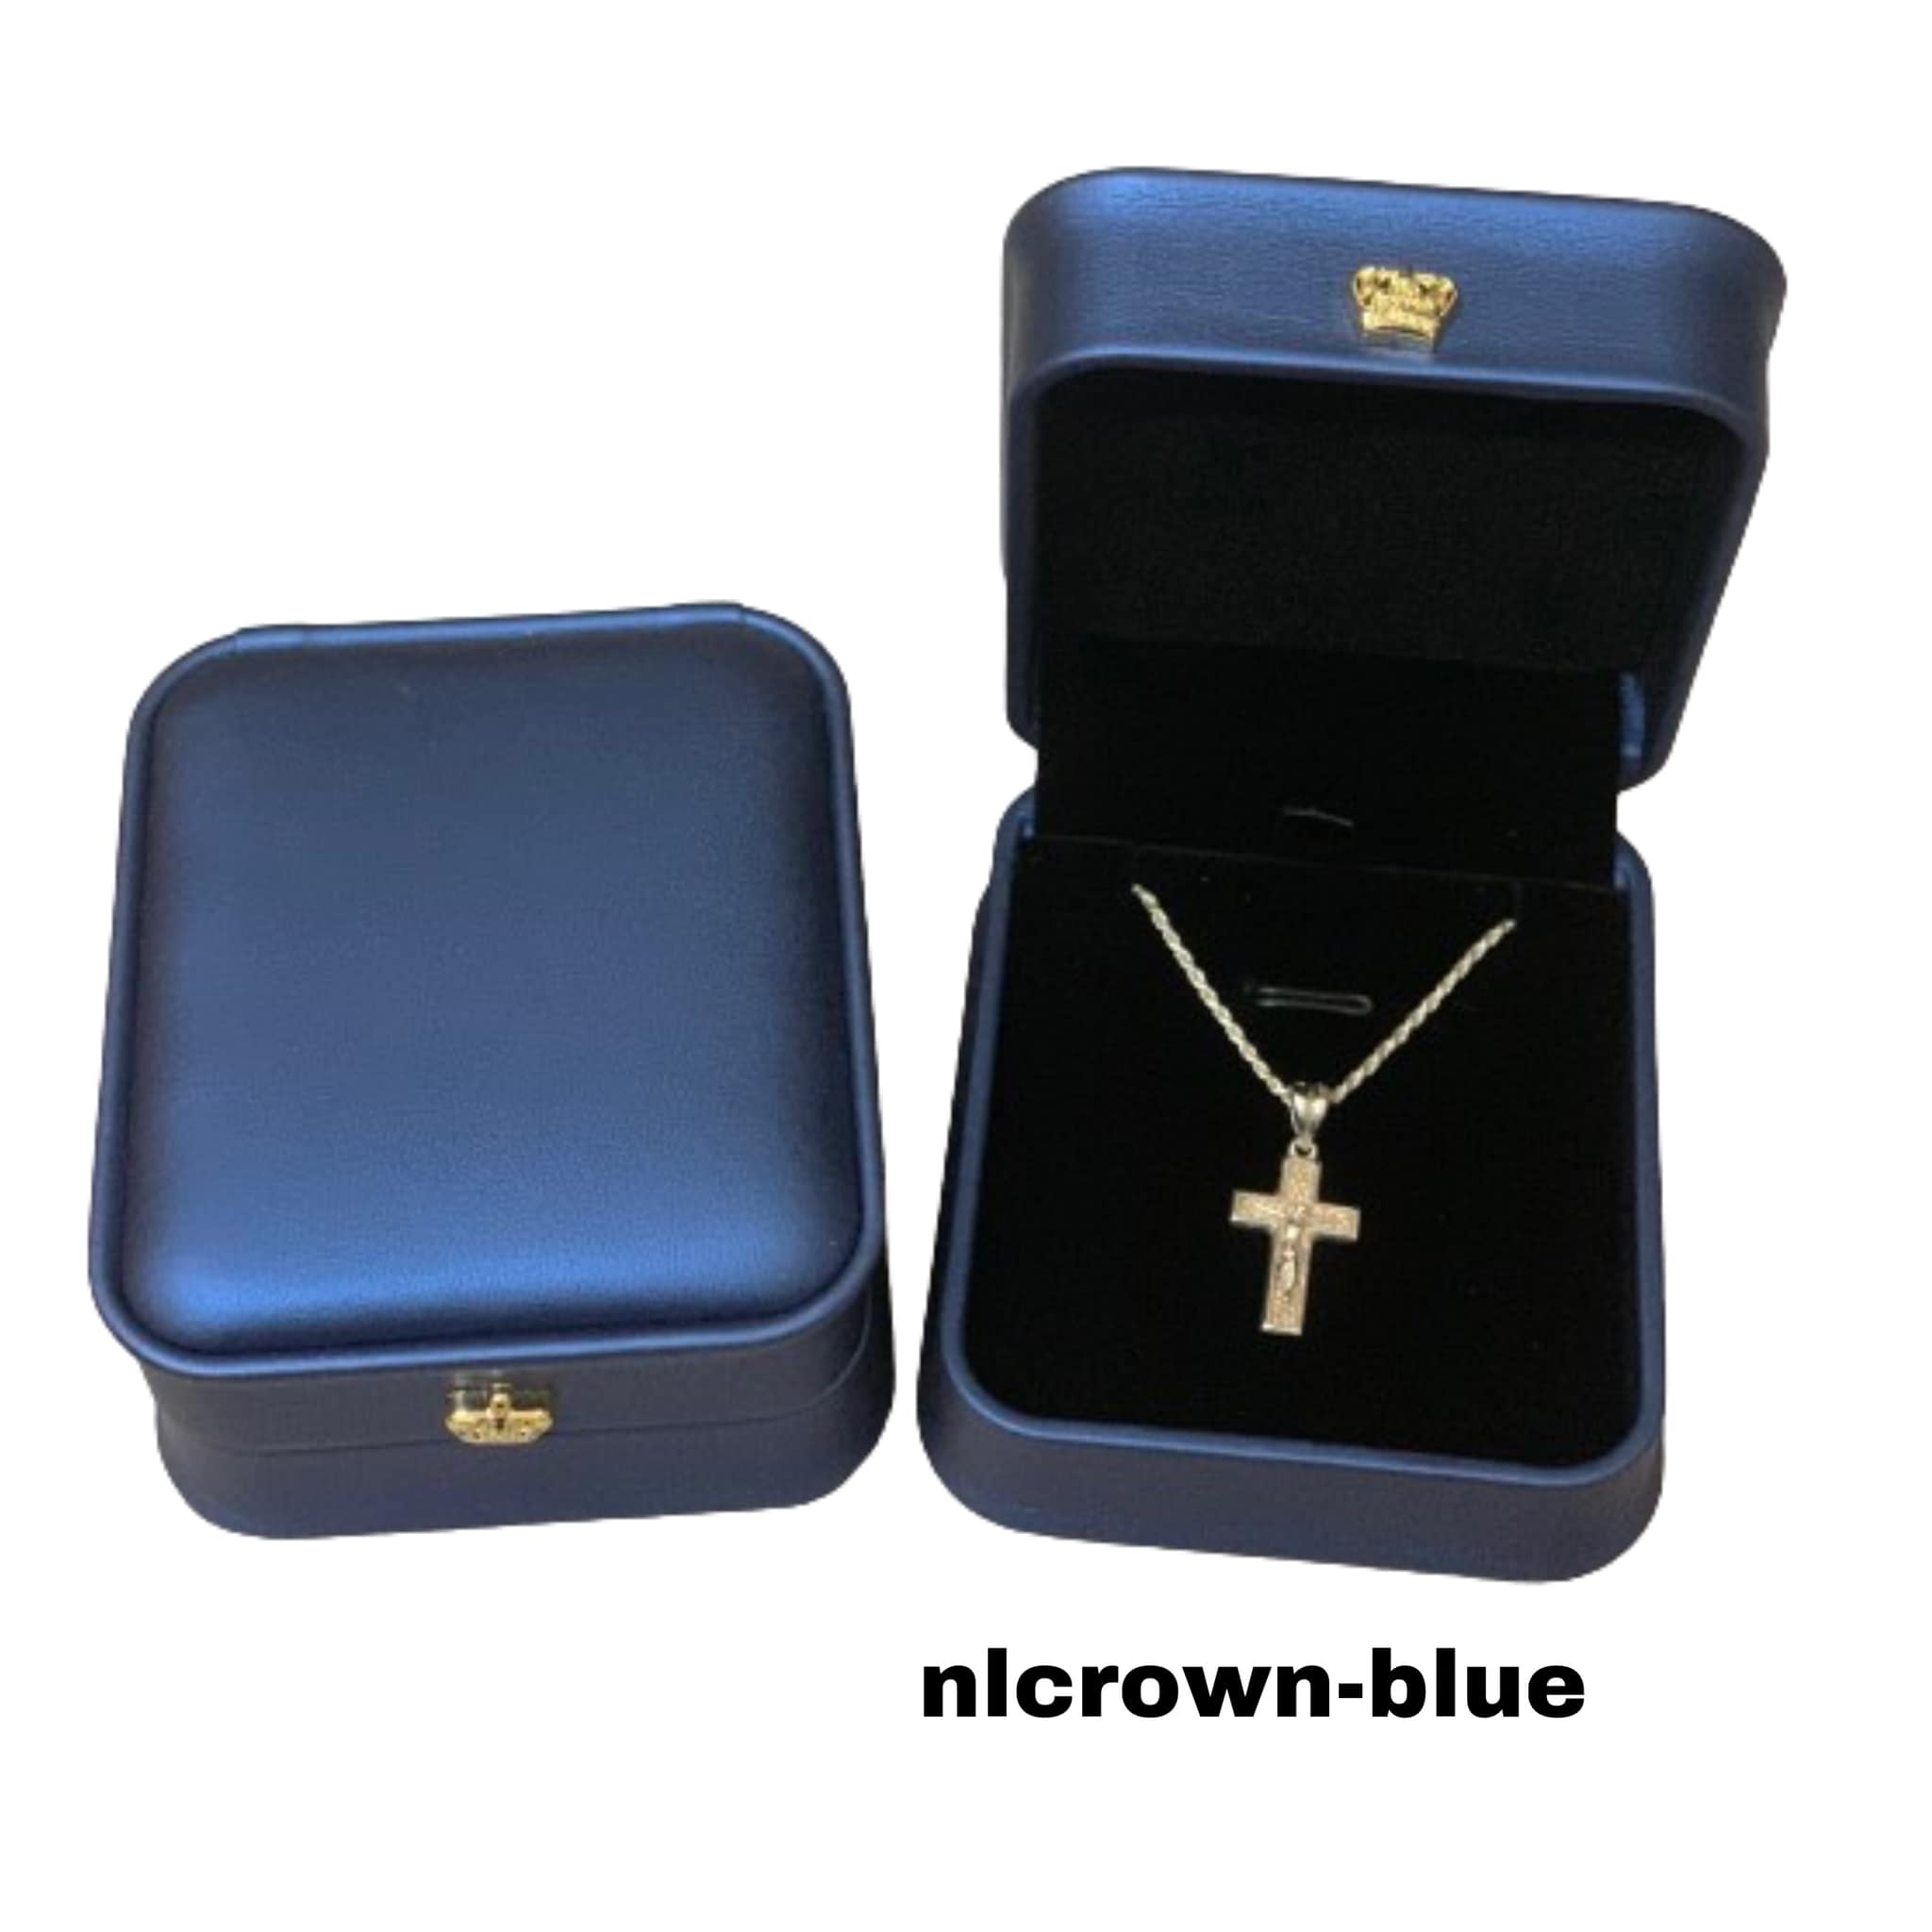 nlcrown-blue